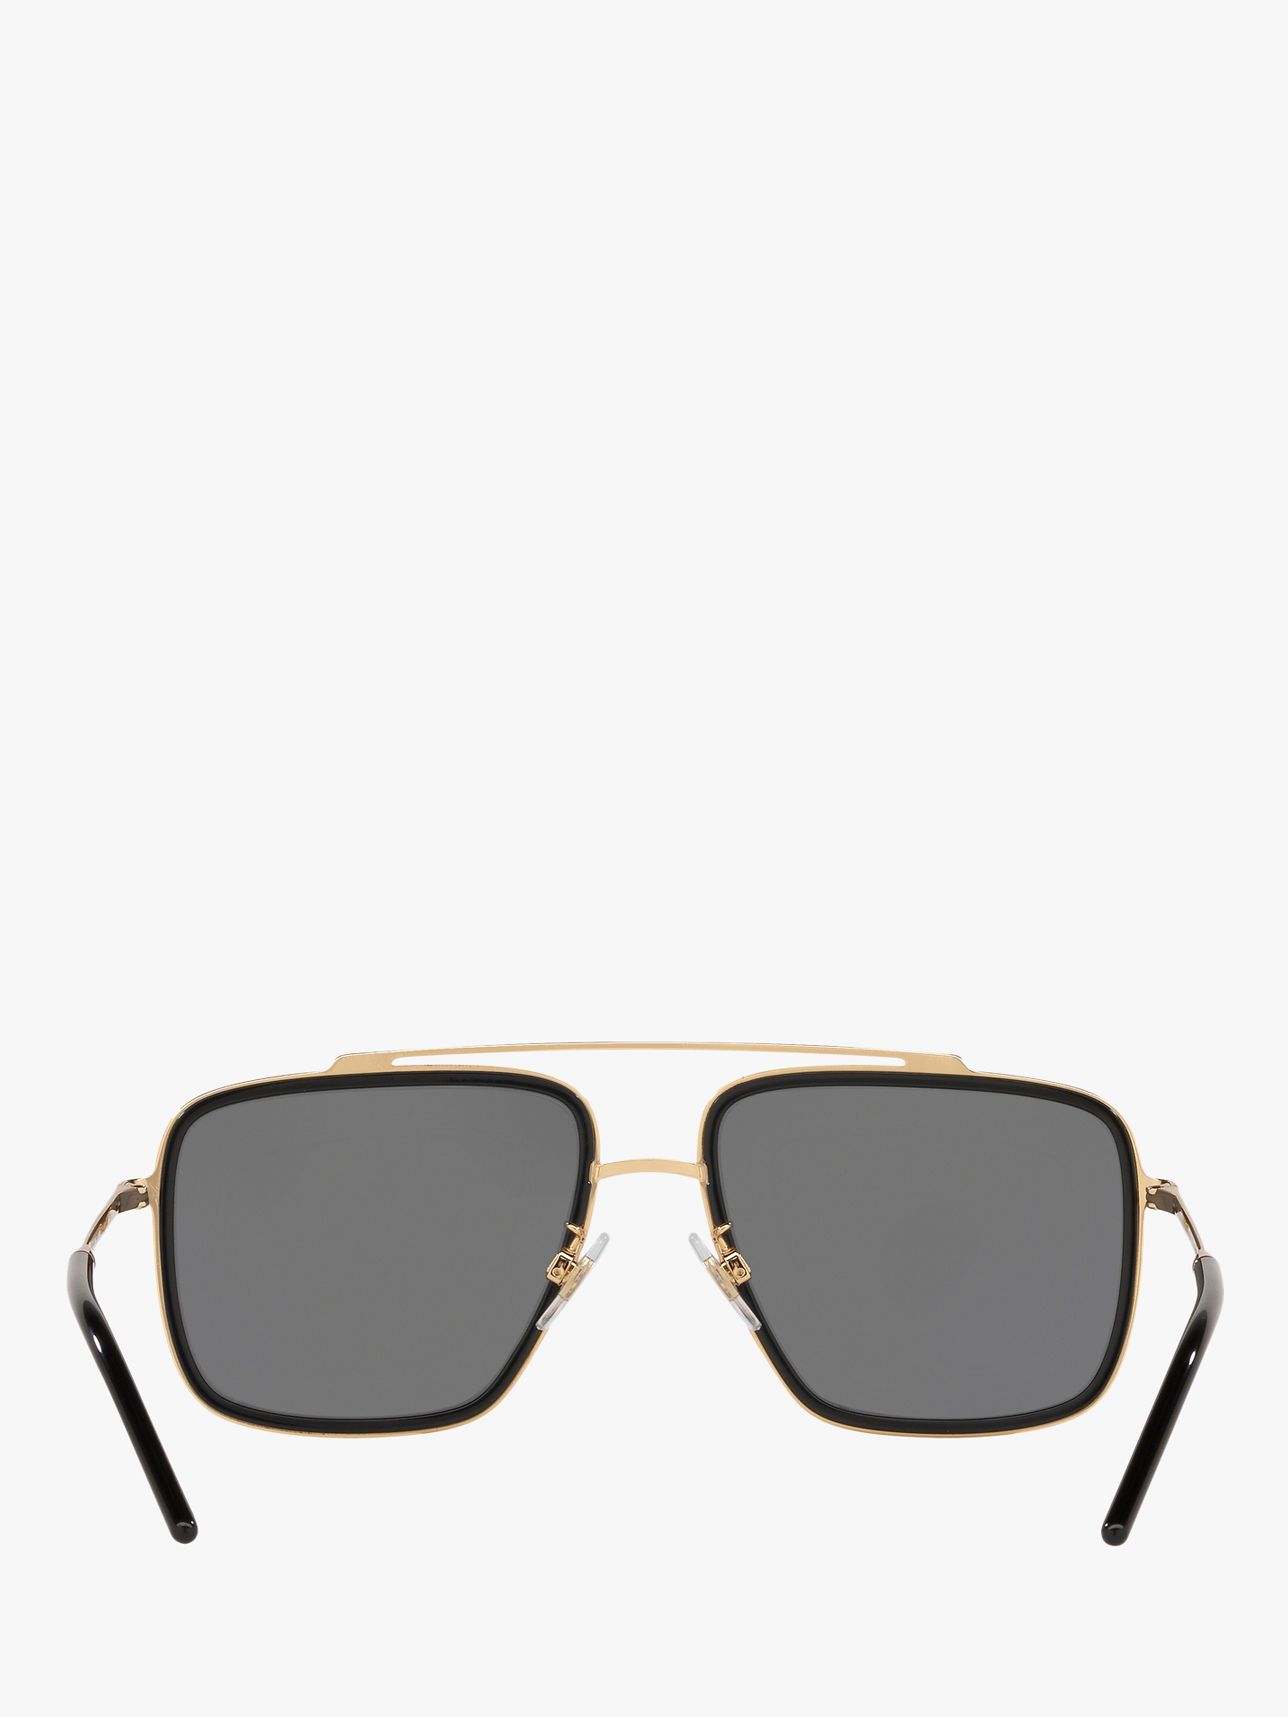 Dolce & Gabbana DG2220 Men's Polarised Square Sunglasses, Gold/Black at ...